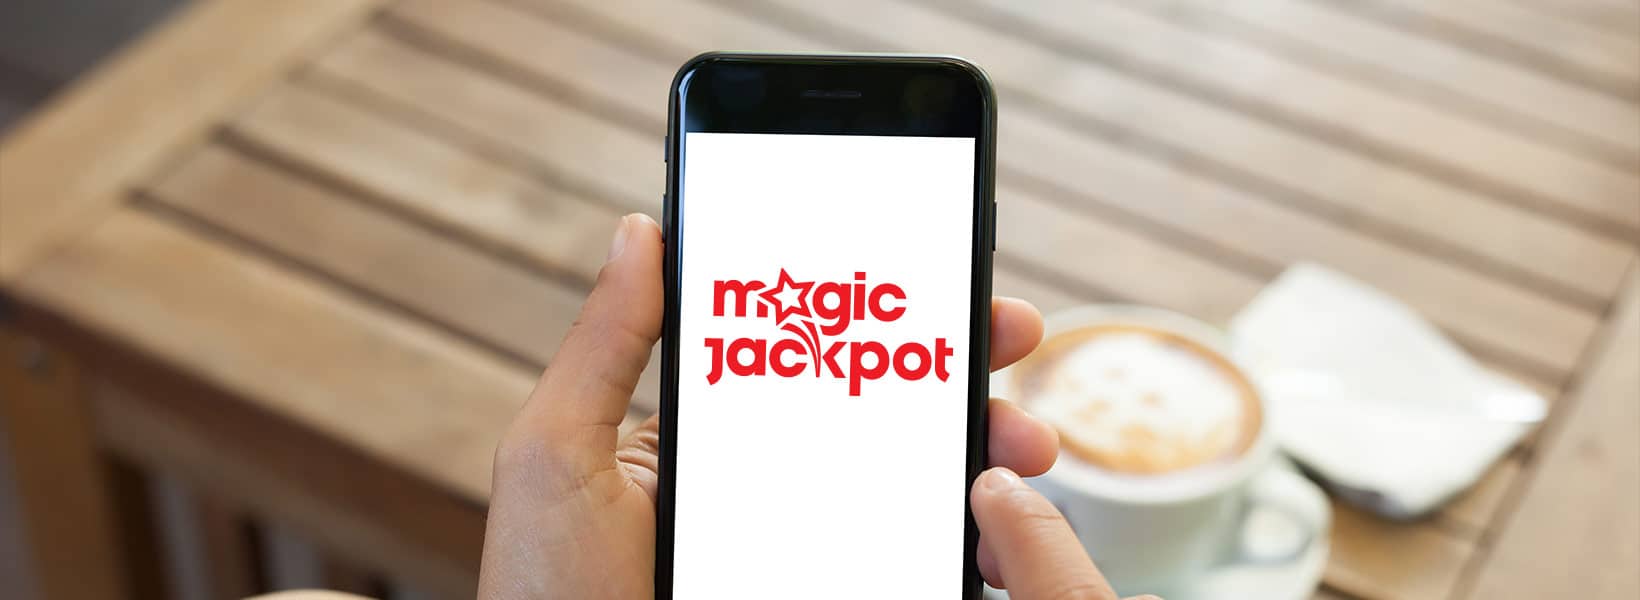 magic jackpot mobile